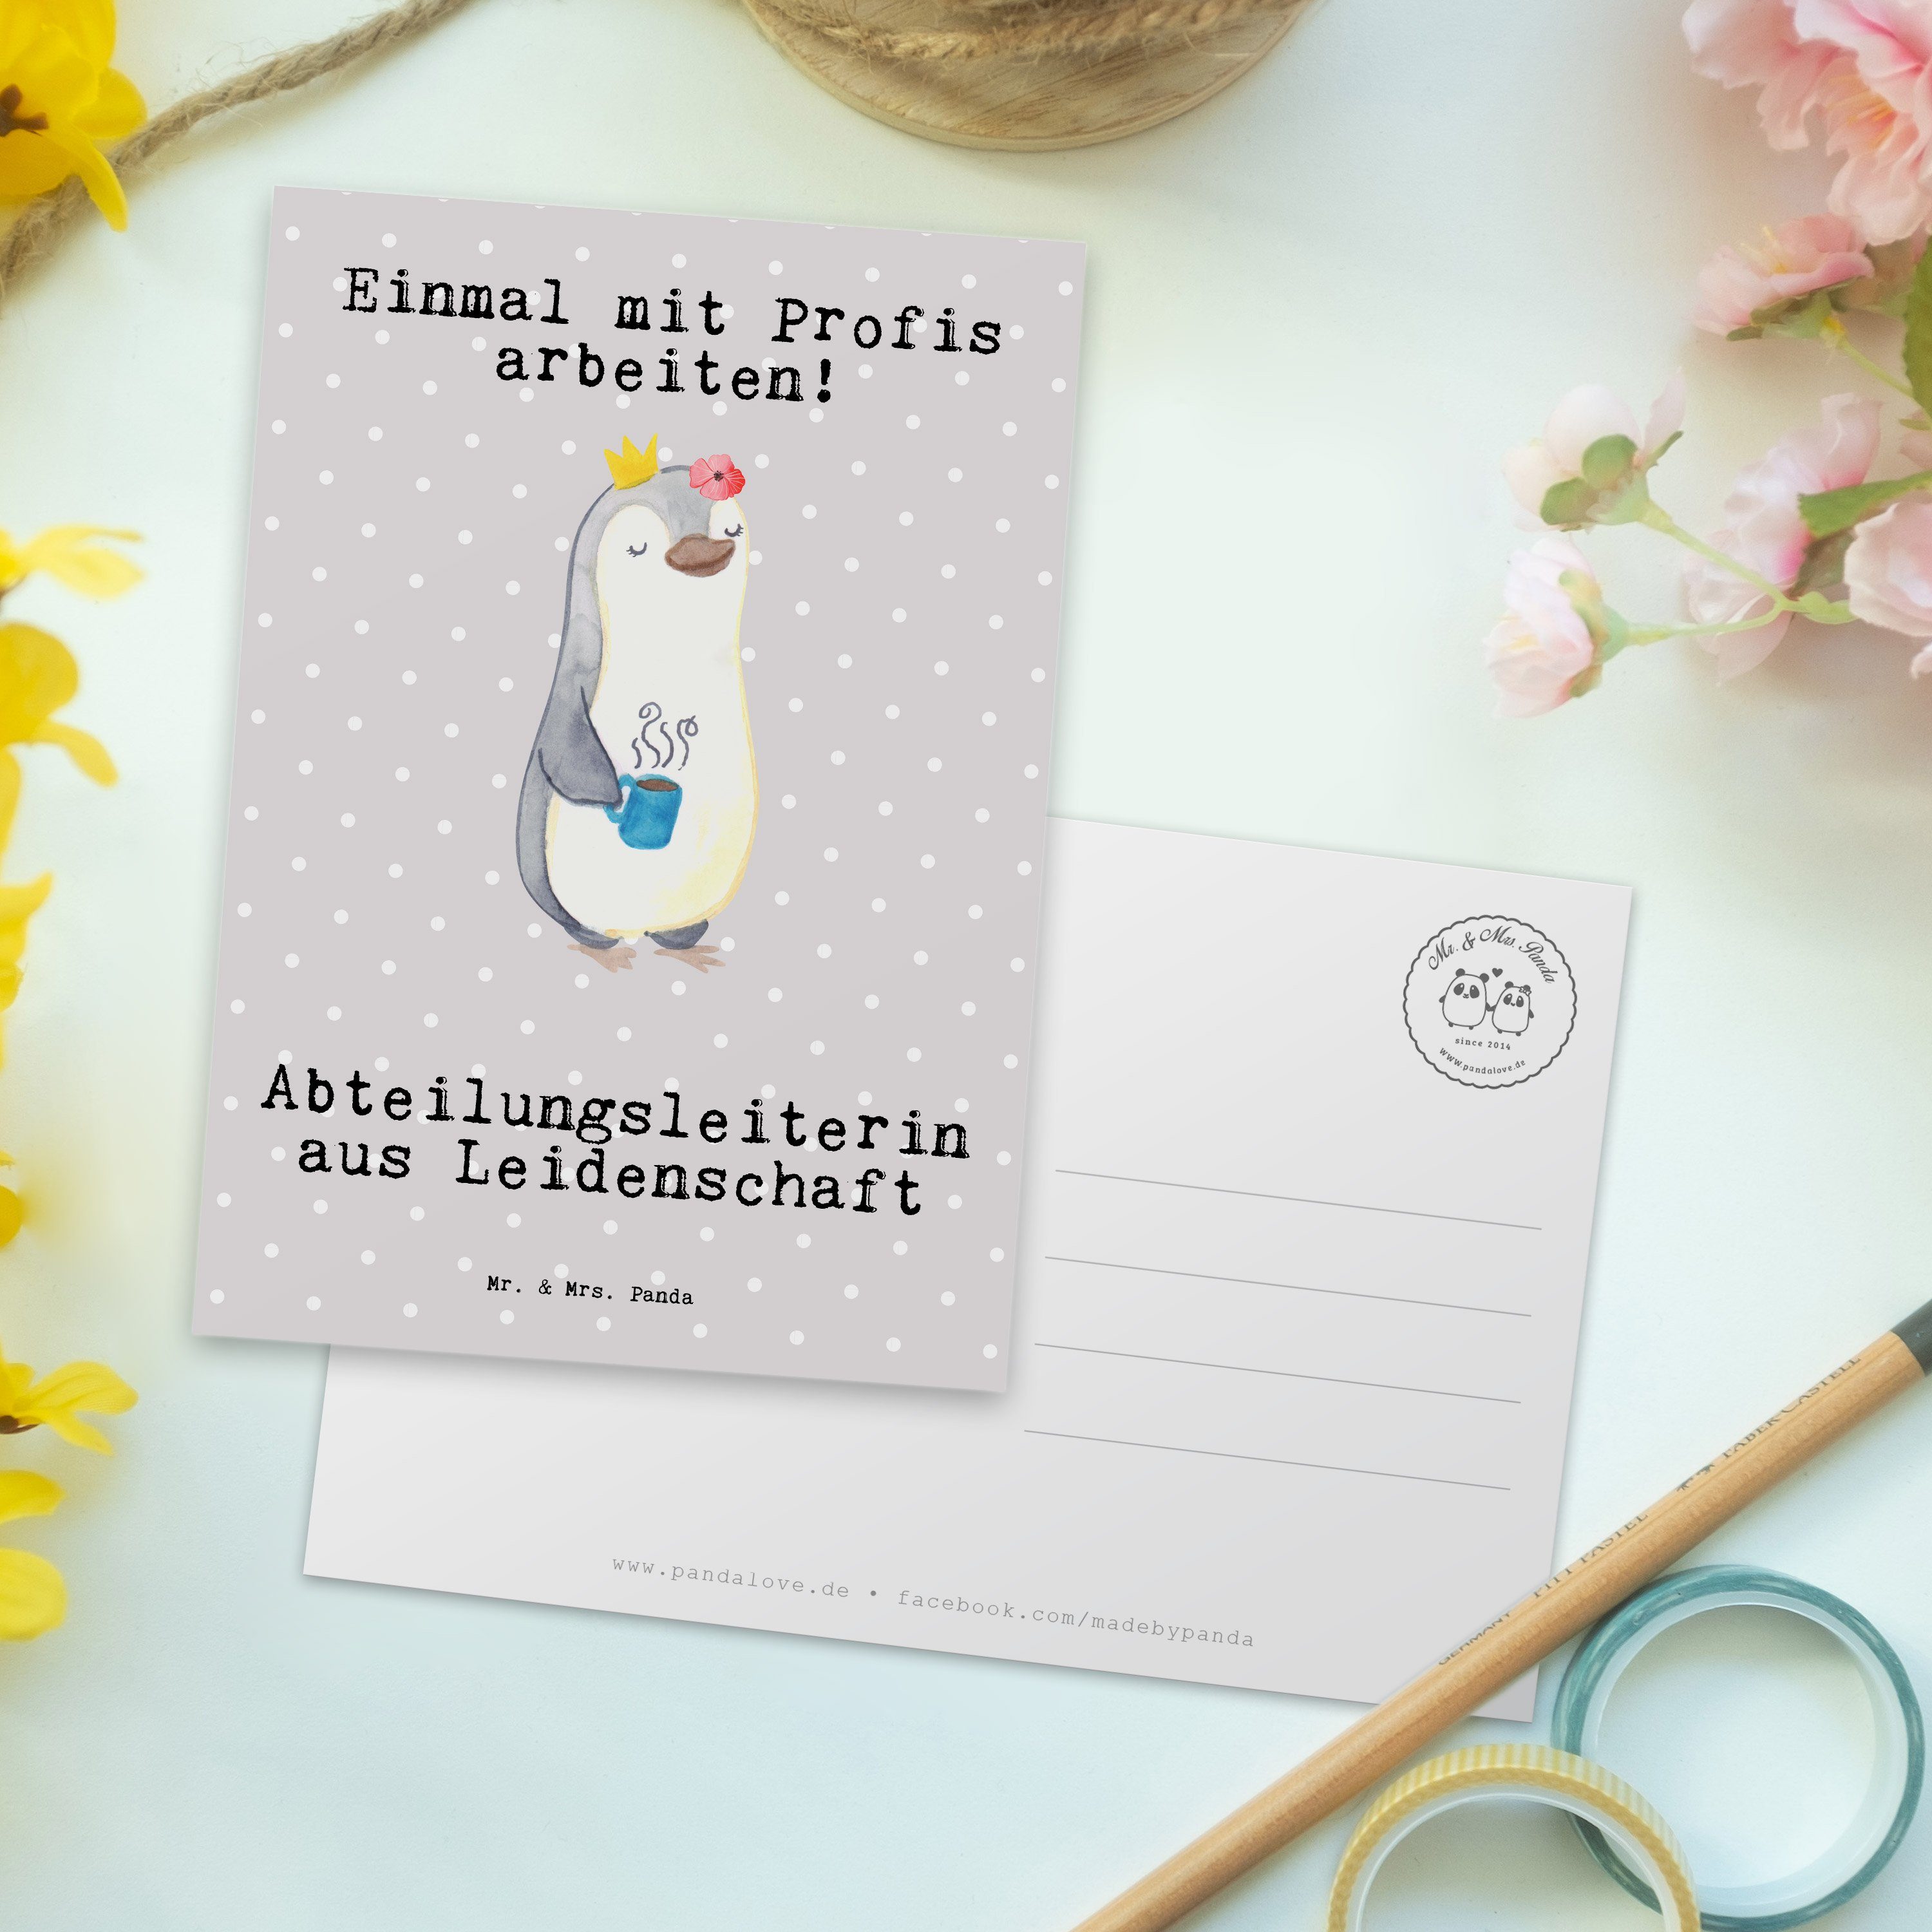 Mr. & Mrs. Kolleg Pastell Leidenschaft Abteilungsleiterin - Grau Panda Postkarte - aus Geschenk